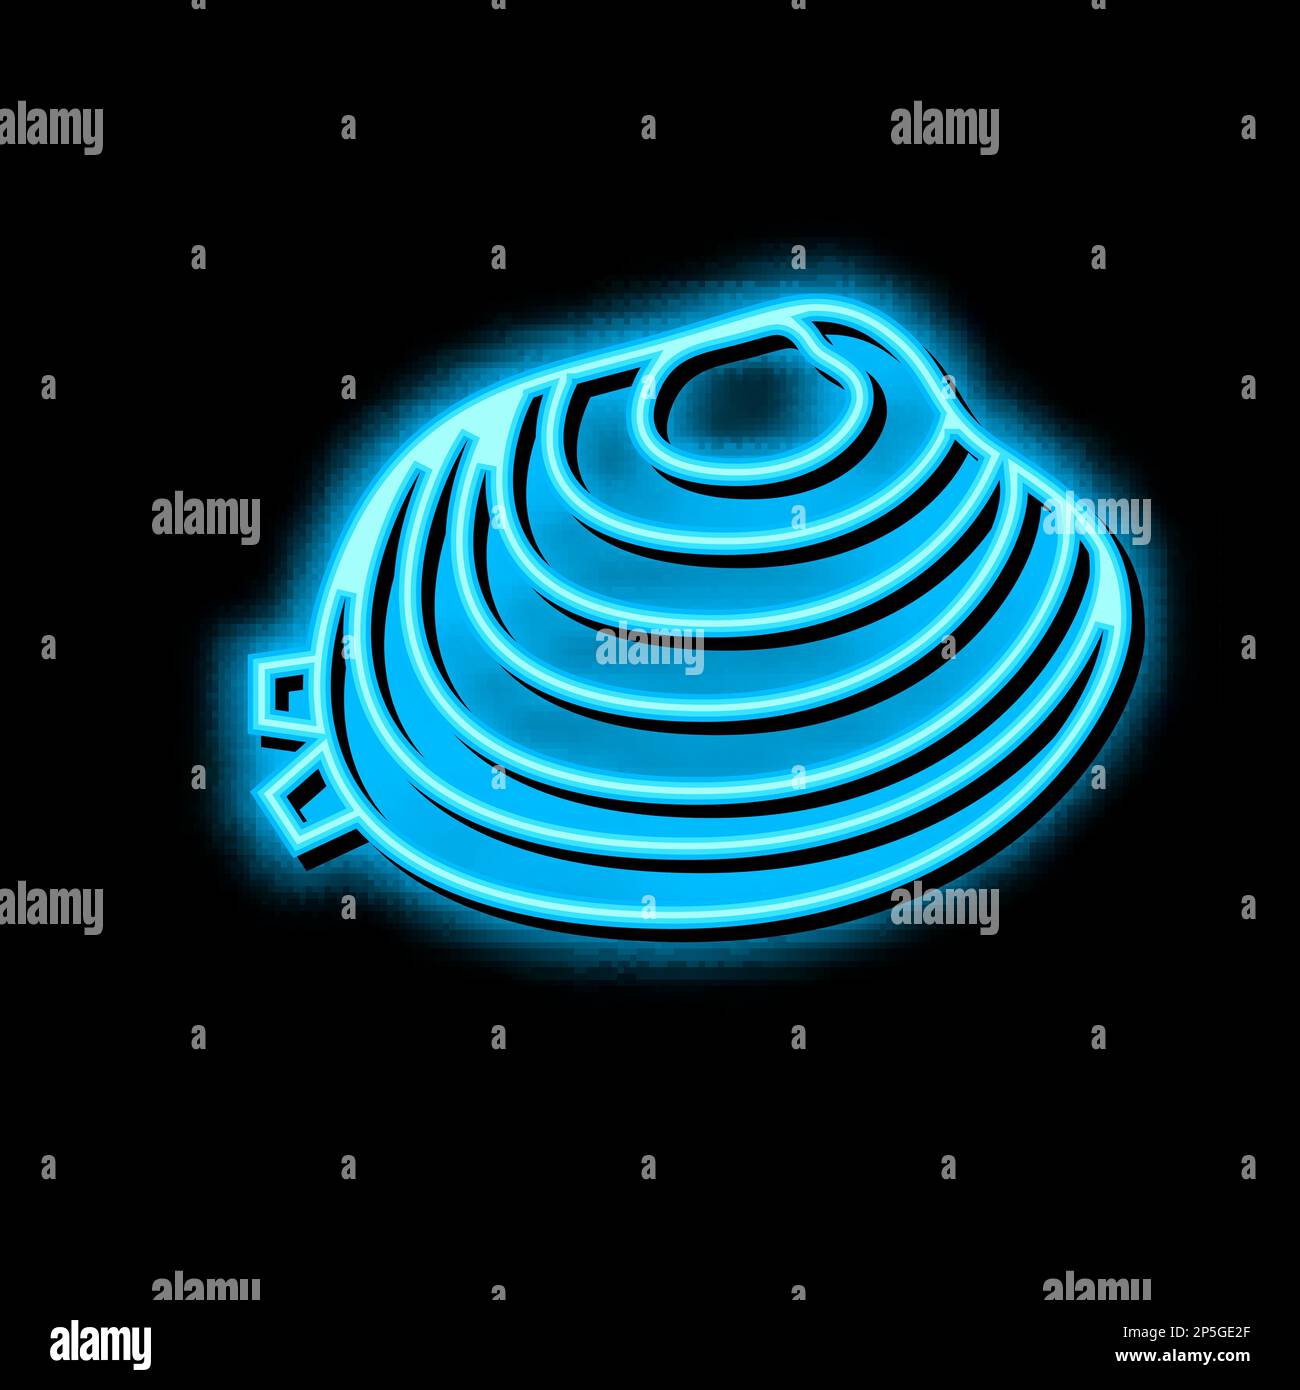 manila clam neon glow icon illustration Stock Vector